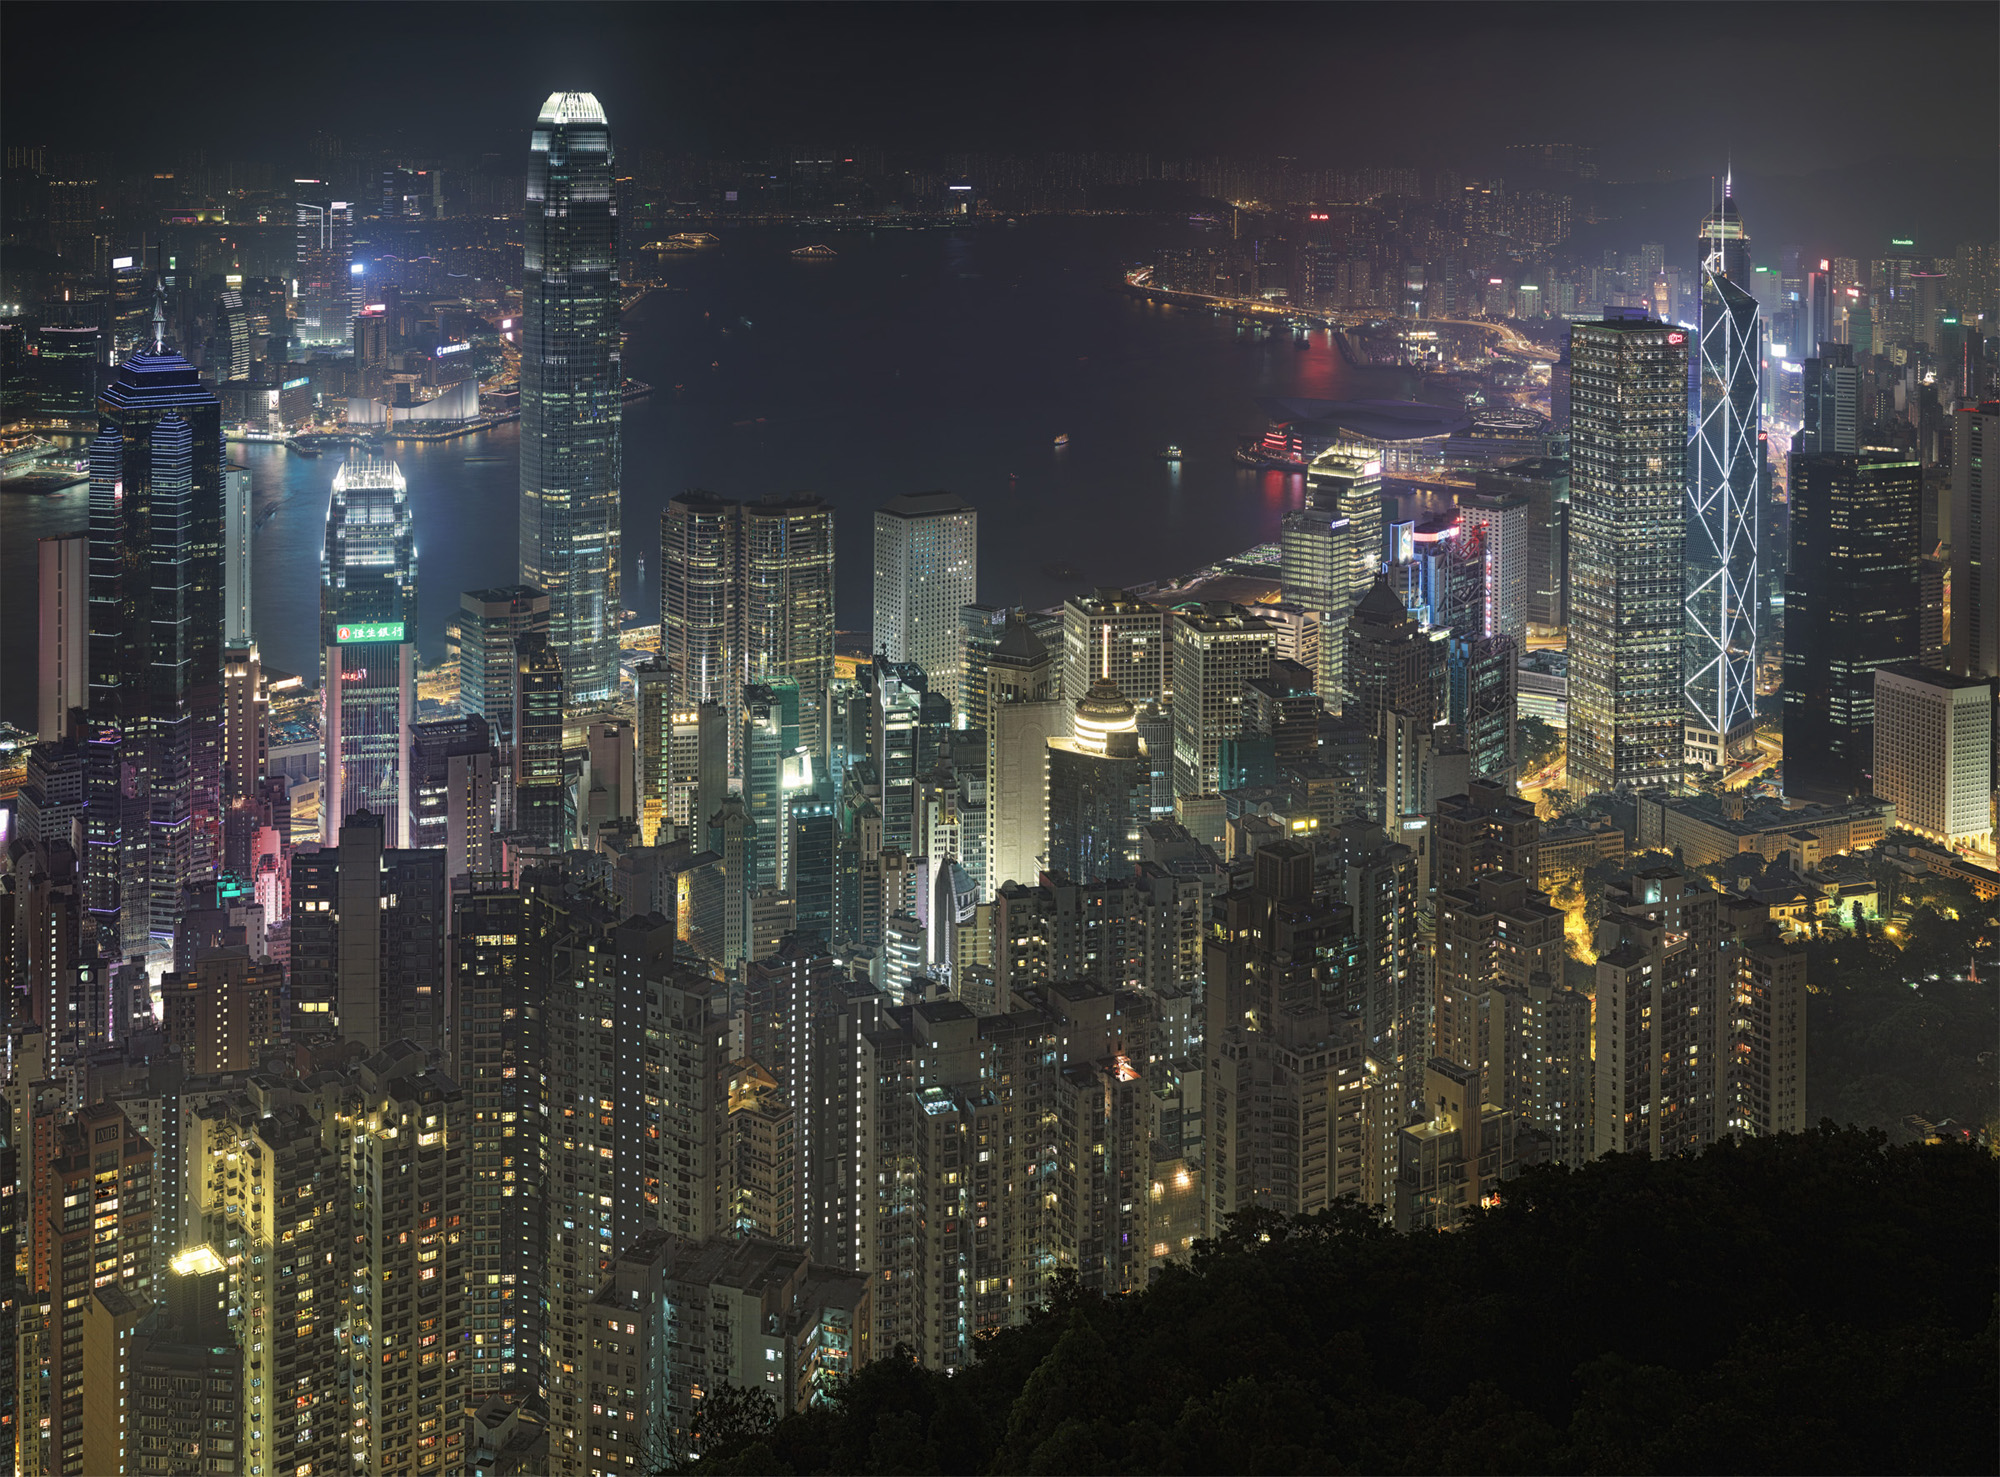 HK from Victoria Peak - Hong Kong, 2013